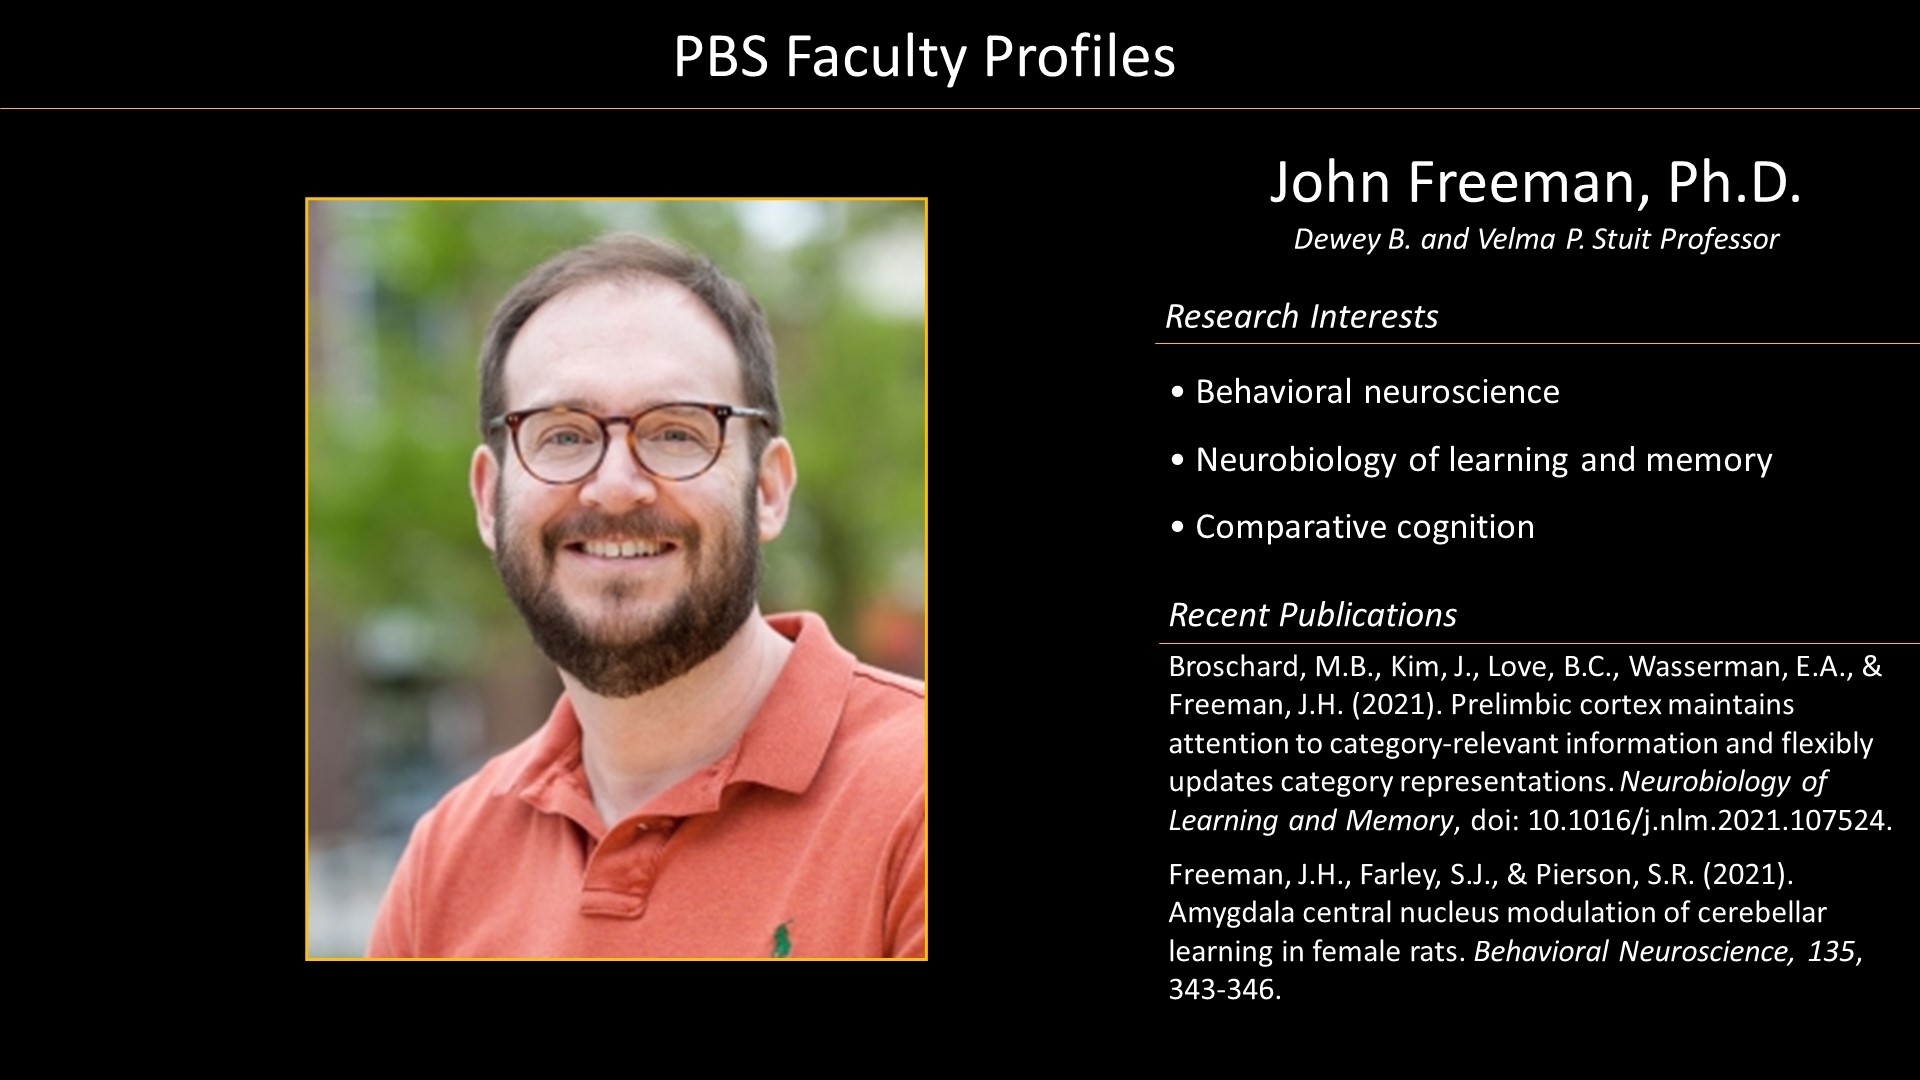 Professor John Freeman Faculty Profile and Photo